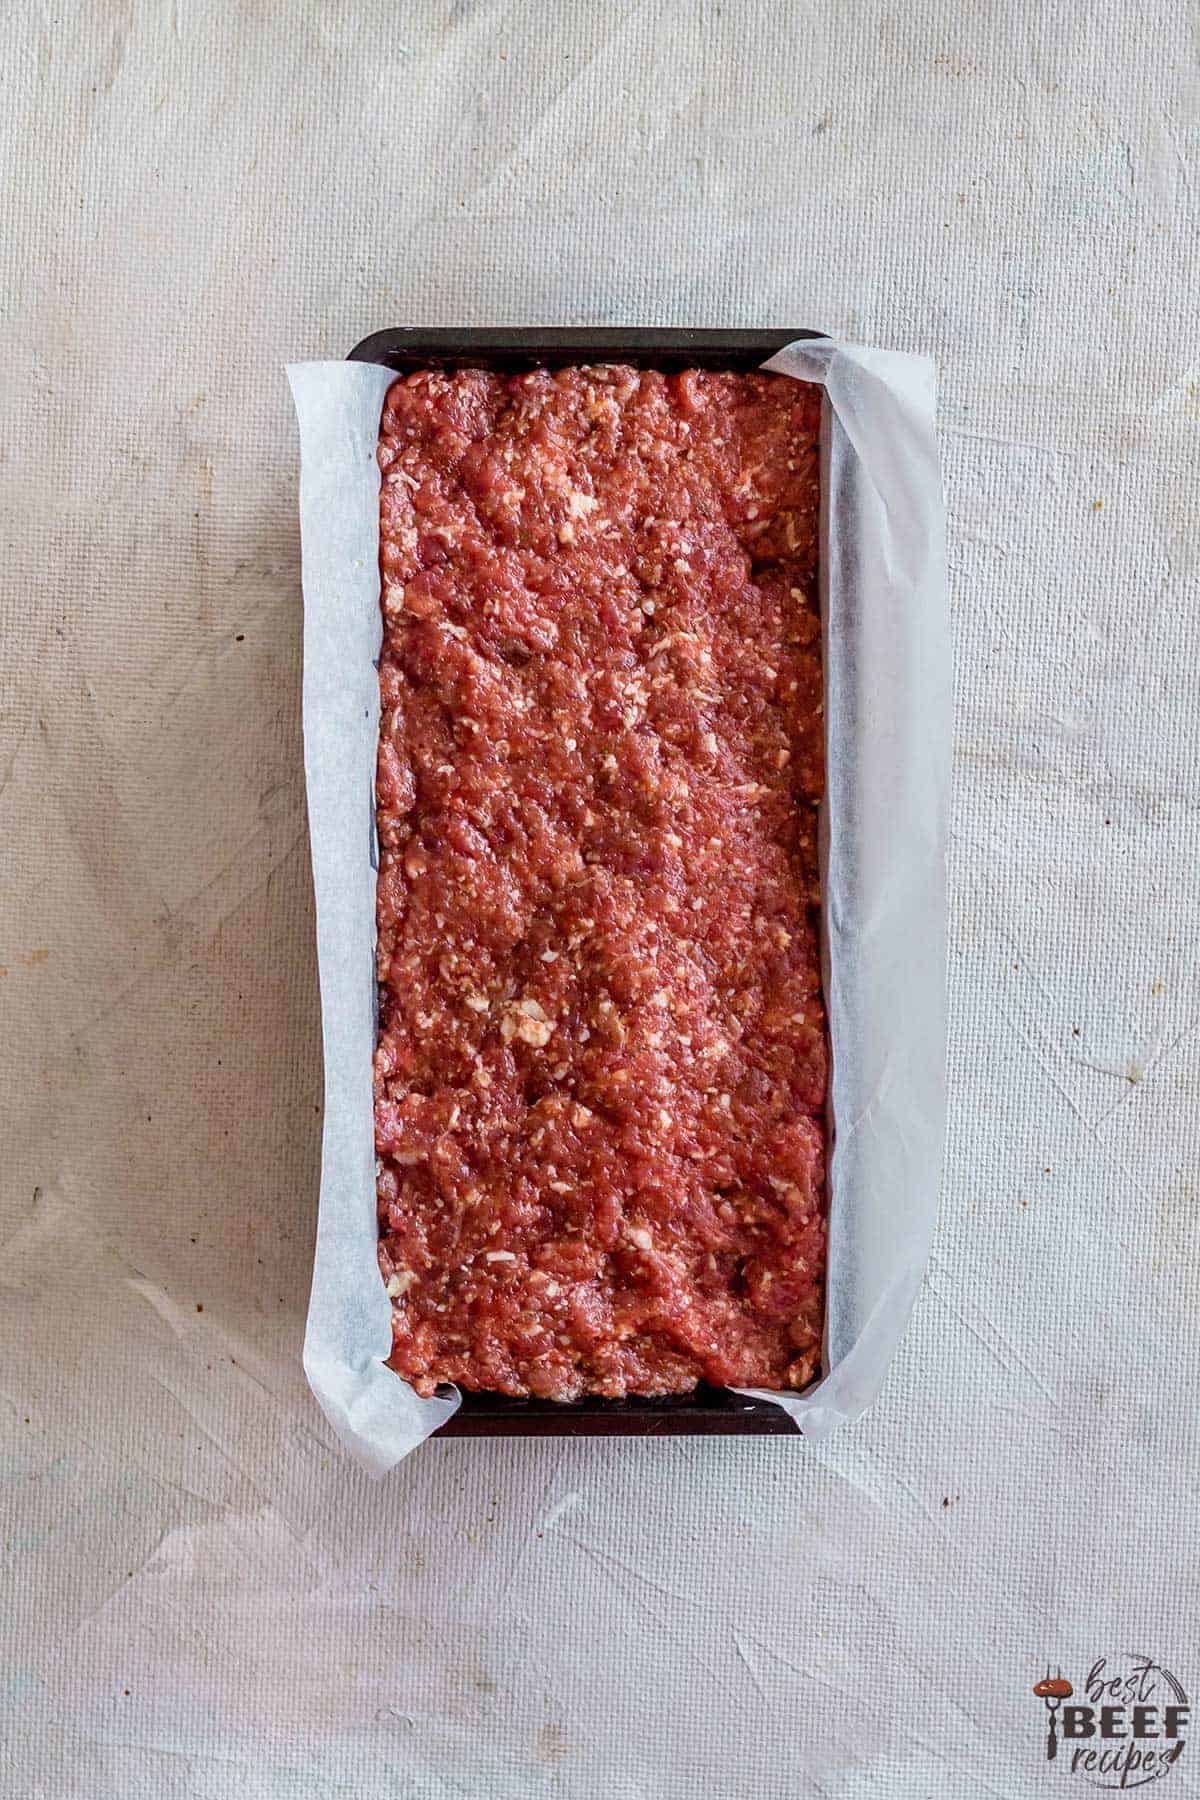 Meatloaf mixture spread into loaf pan